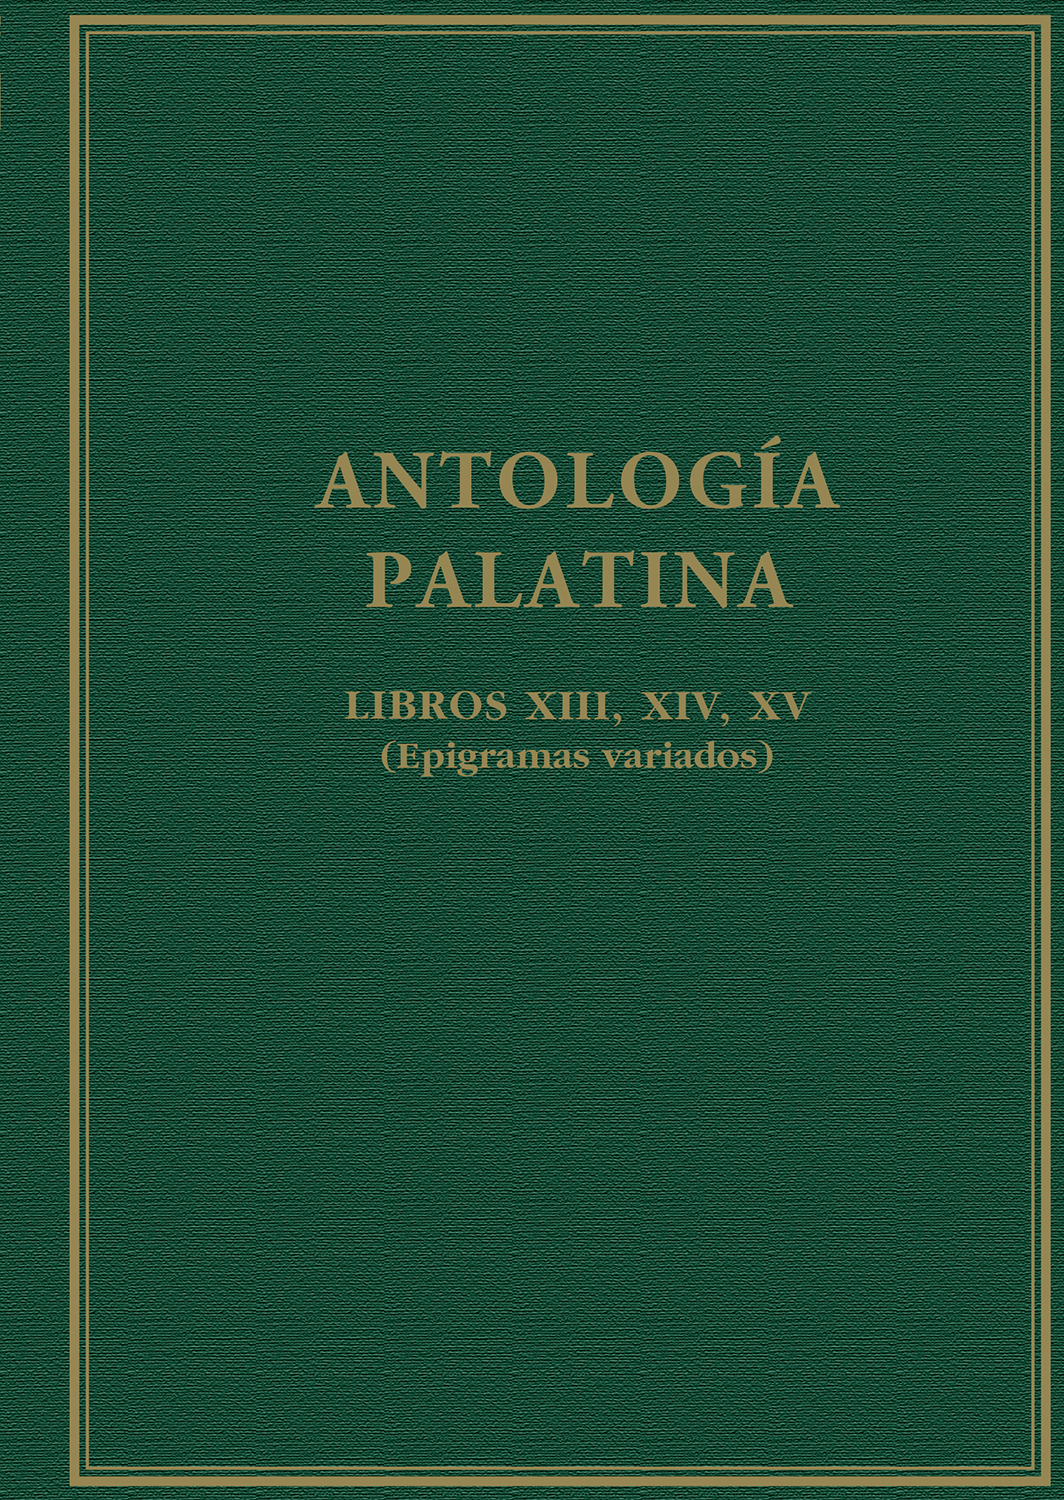 Antología palatina 